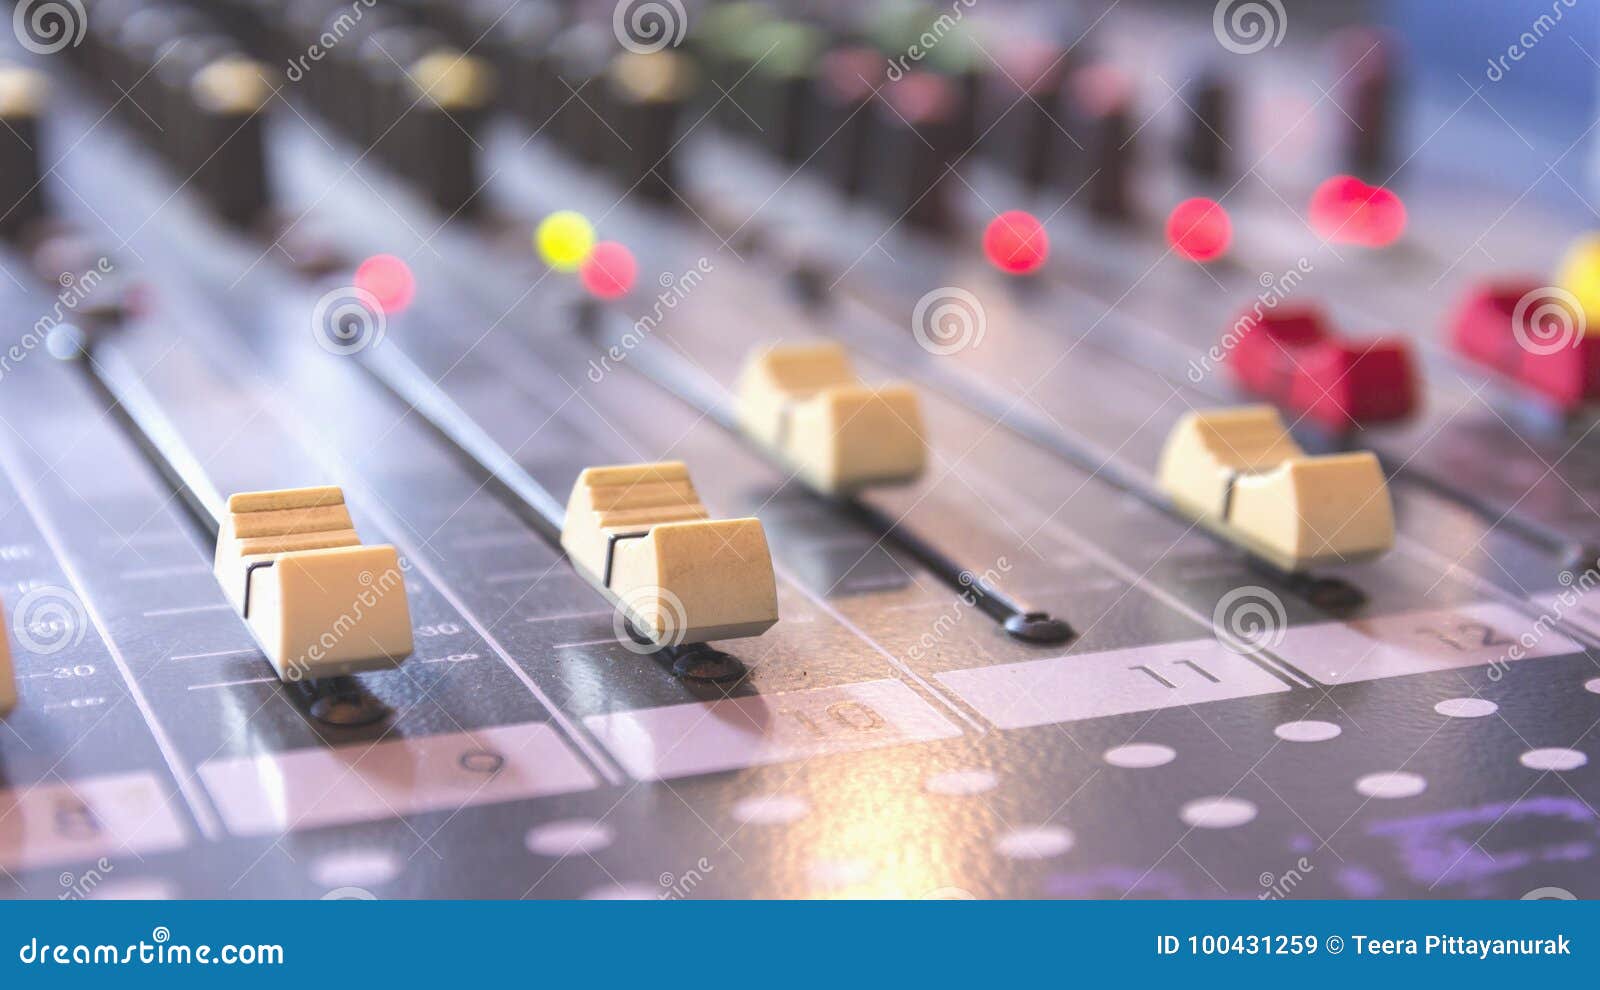 Slide Sound Control Of The Soundboard Stock Image Image